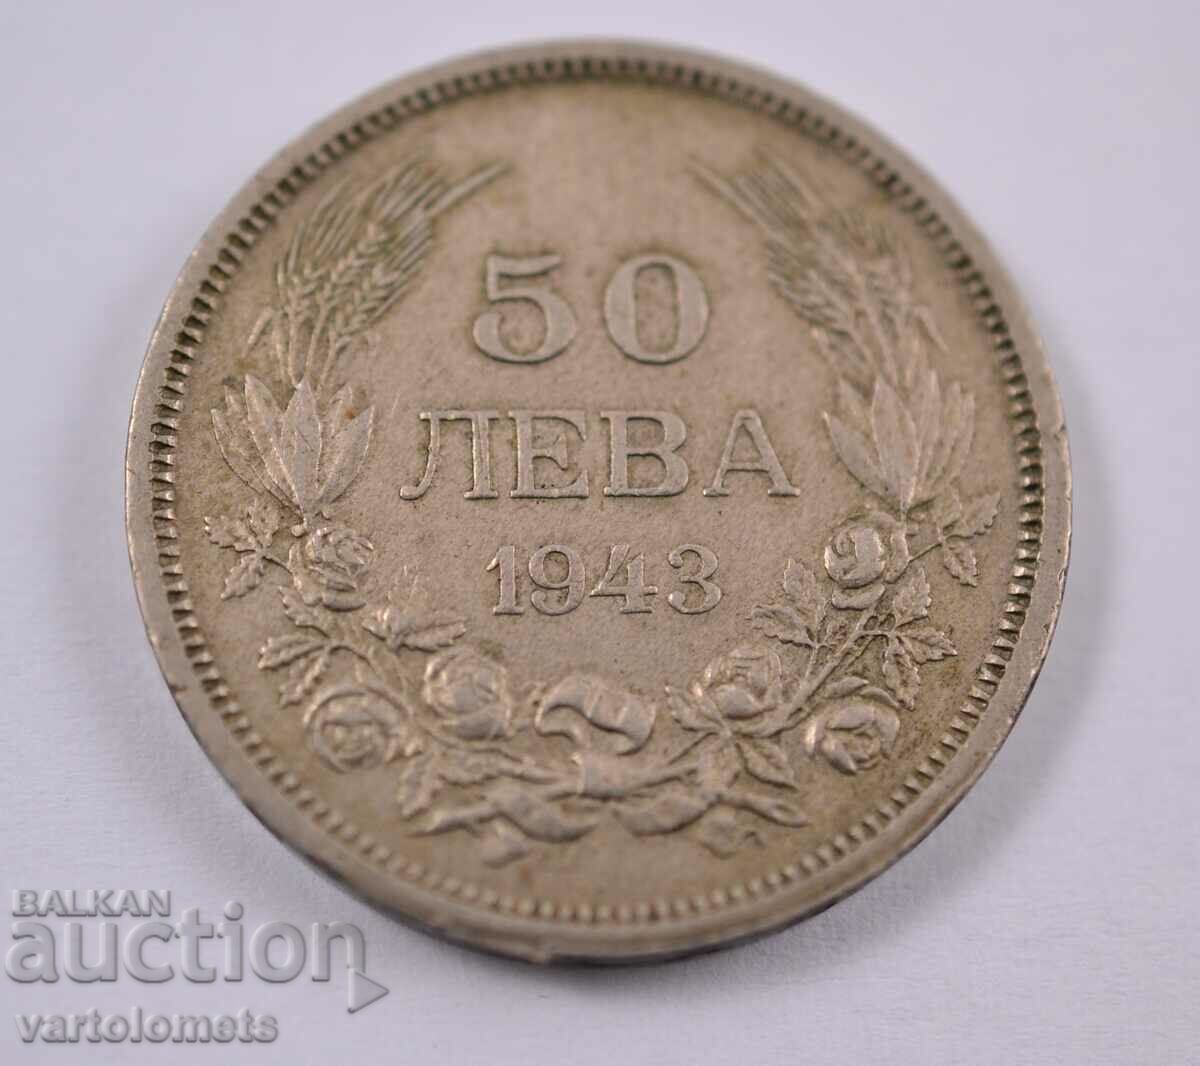 BGN 50 1943 - Bulgaria